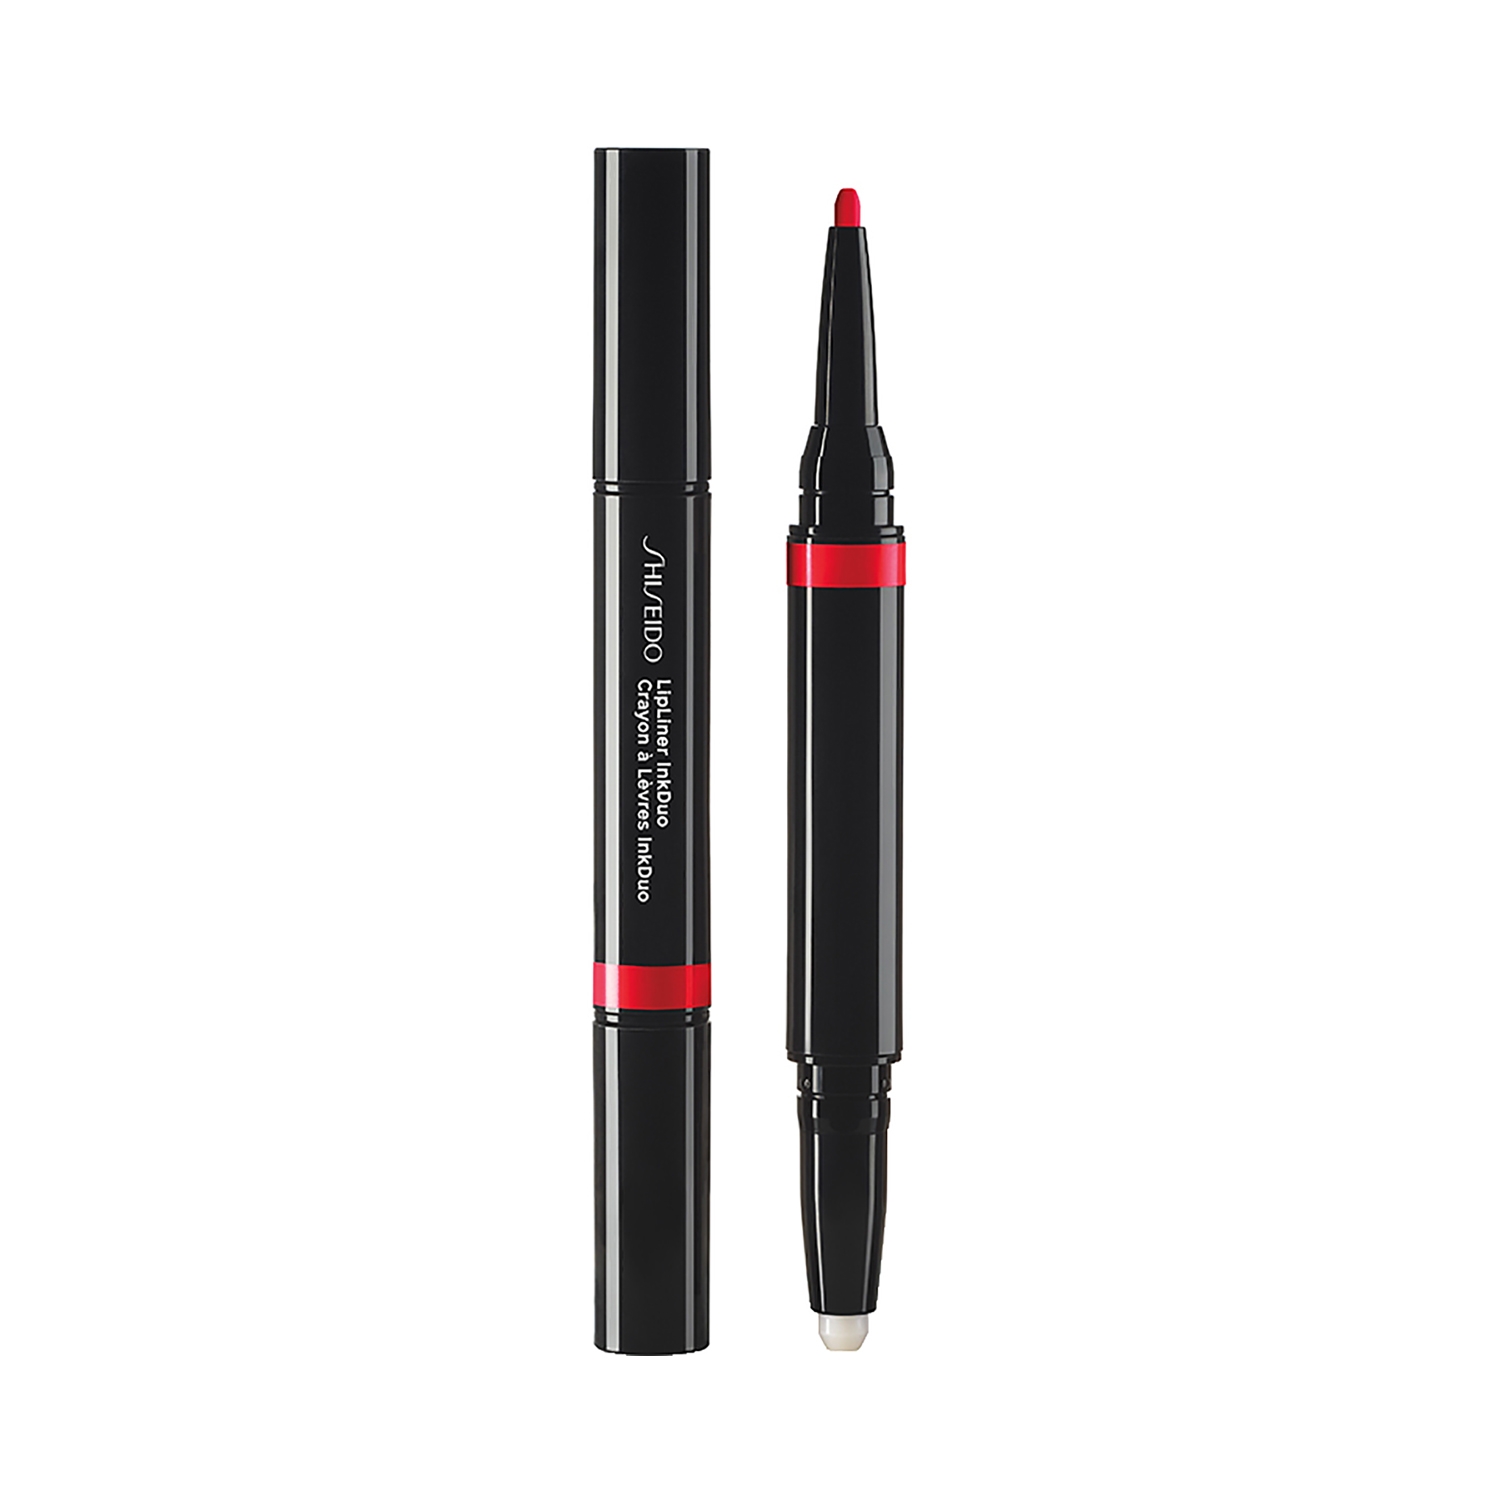 Shiseido | Shiseido Inkduo Prime and Line Duo Lipliner - 08 True Red (1.1g)